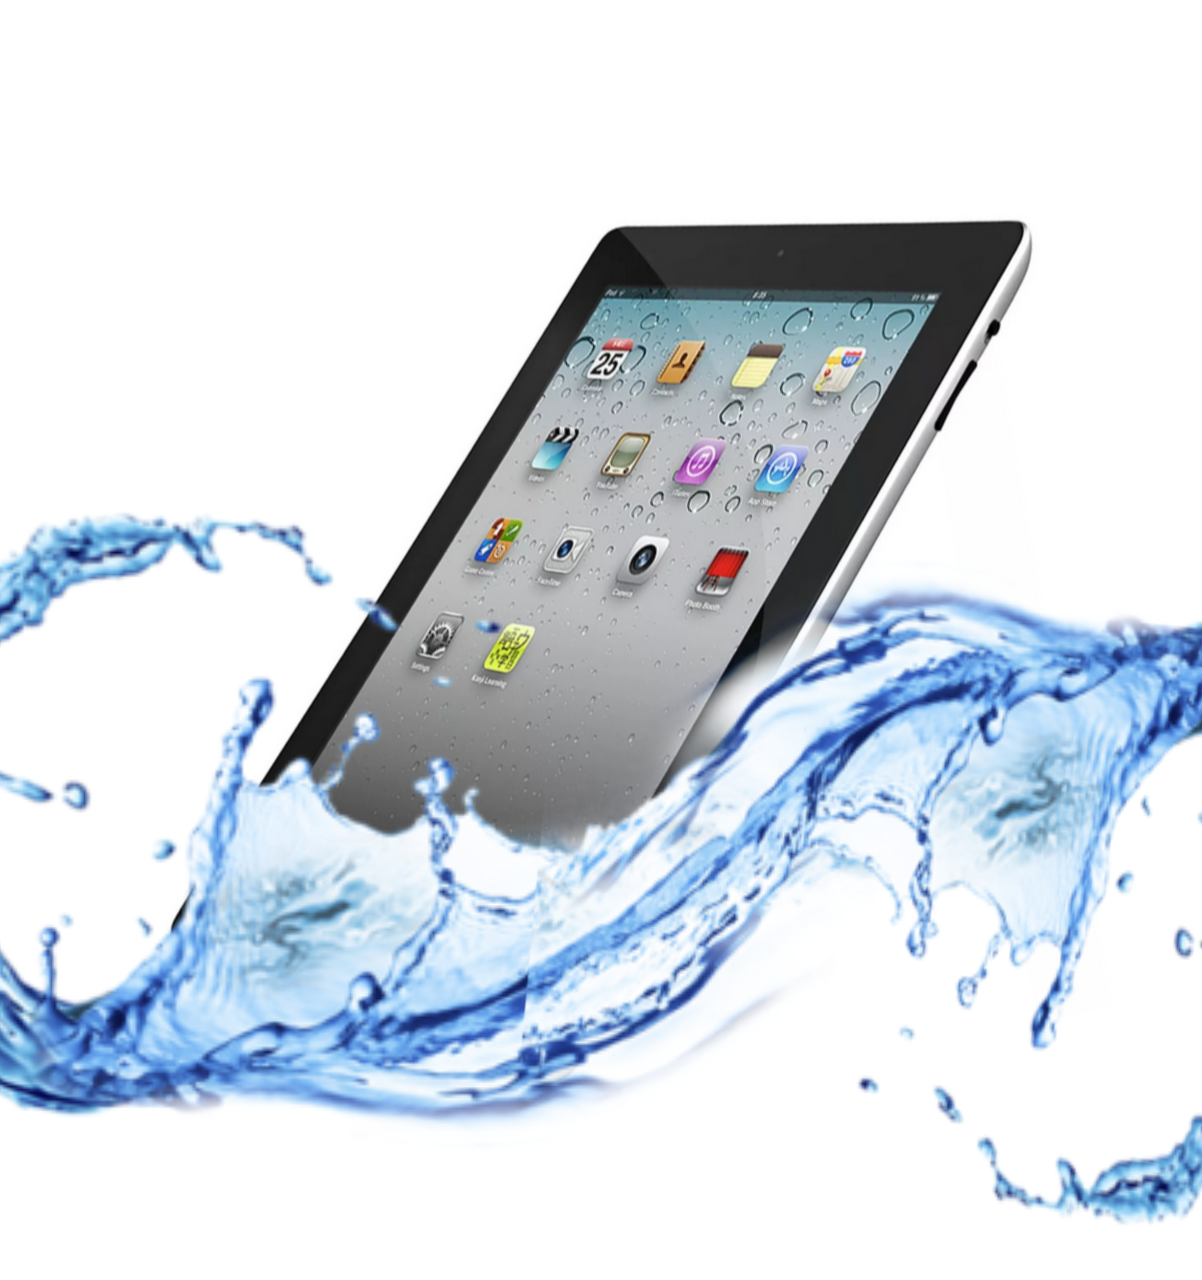 Чистка iPad 2 после воды